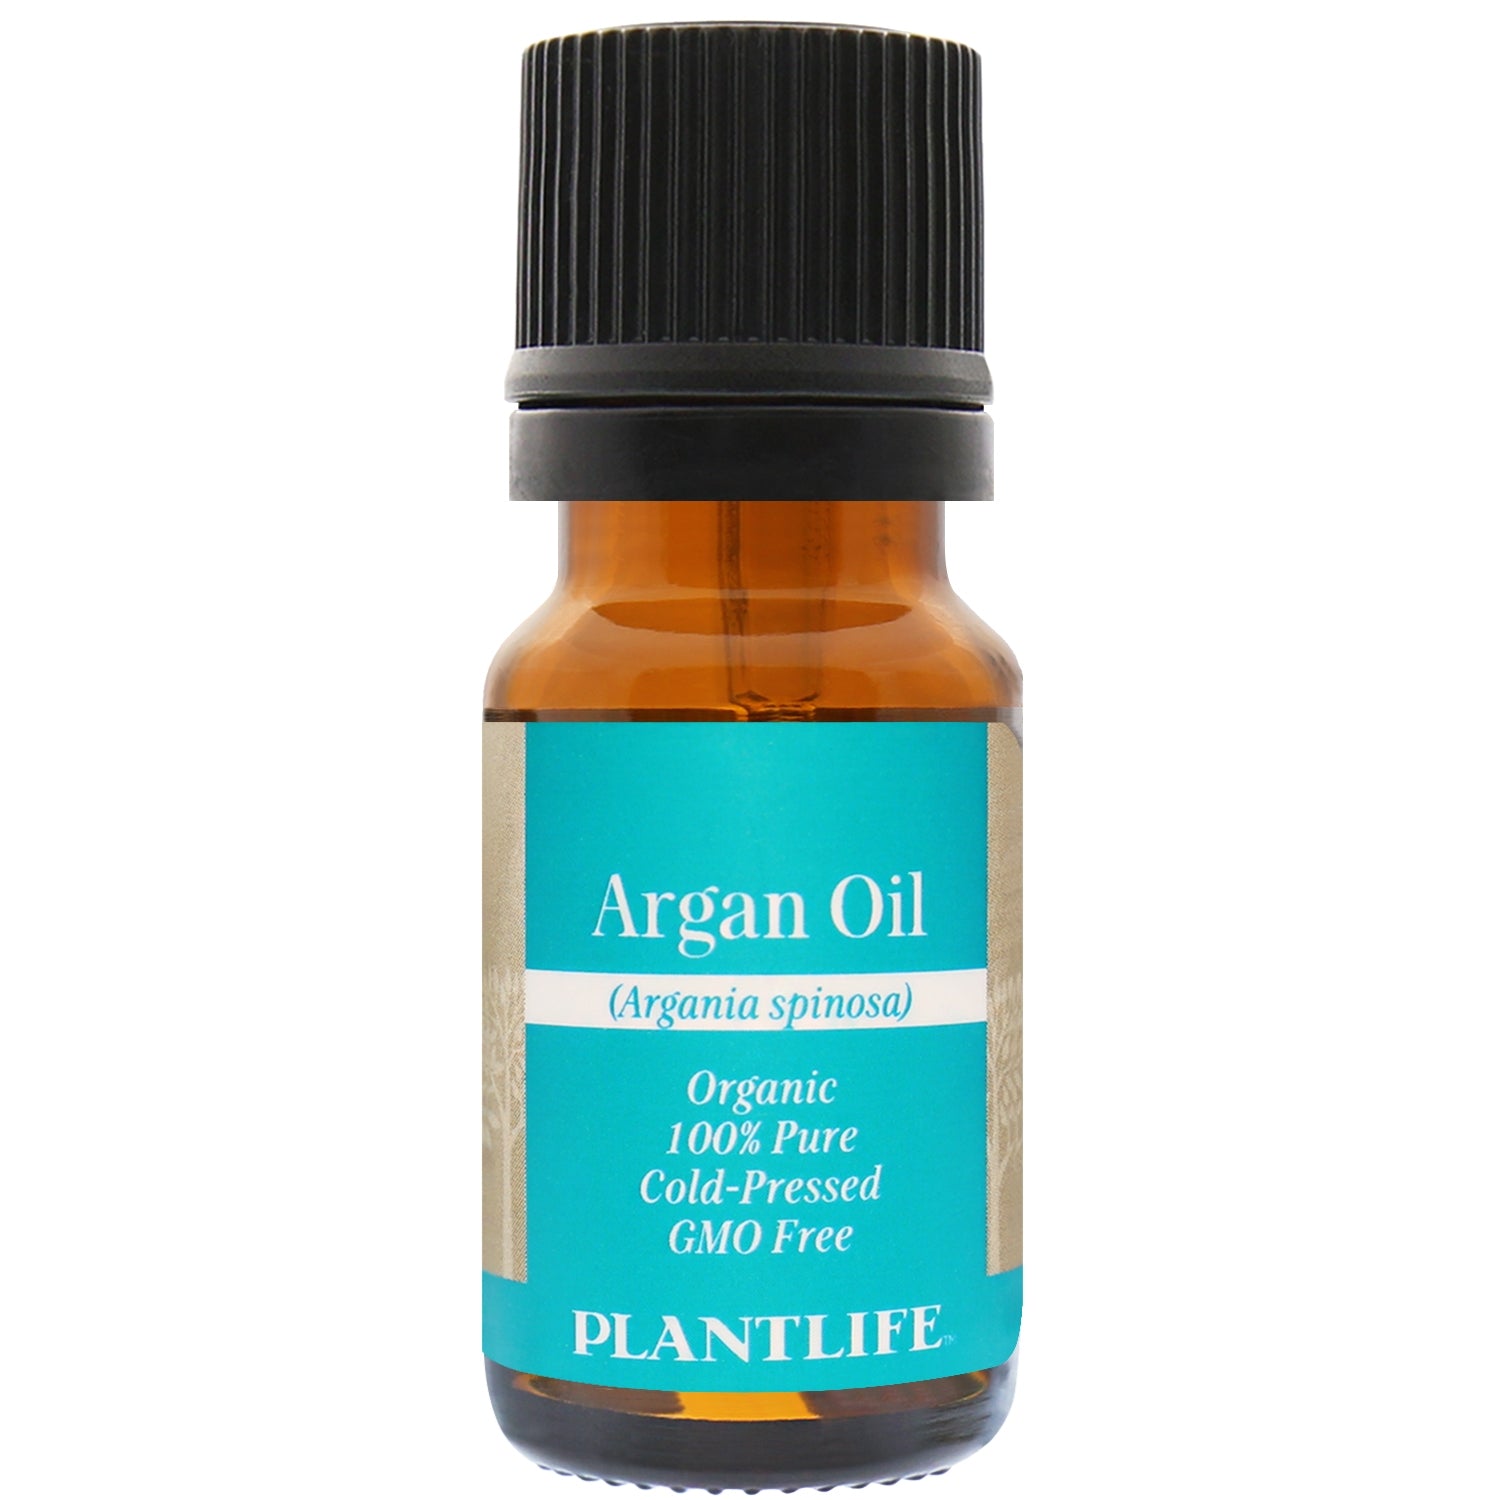 Pranarom: Organic Argan Virgin Plant Oil – Organic Living AZ